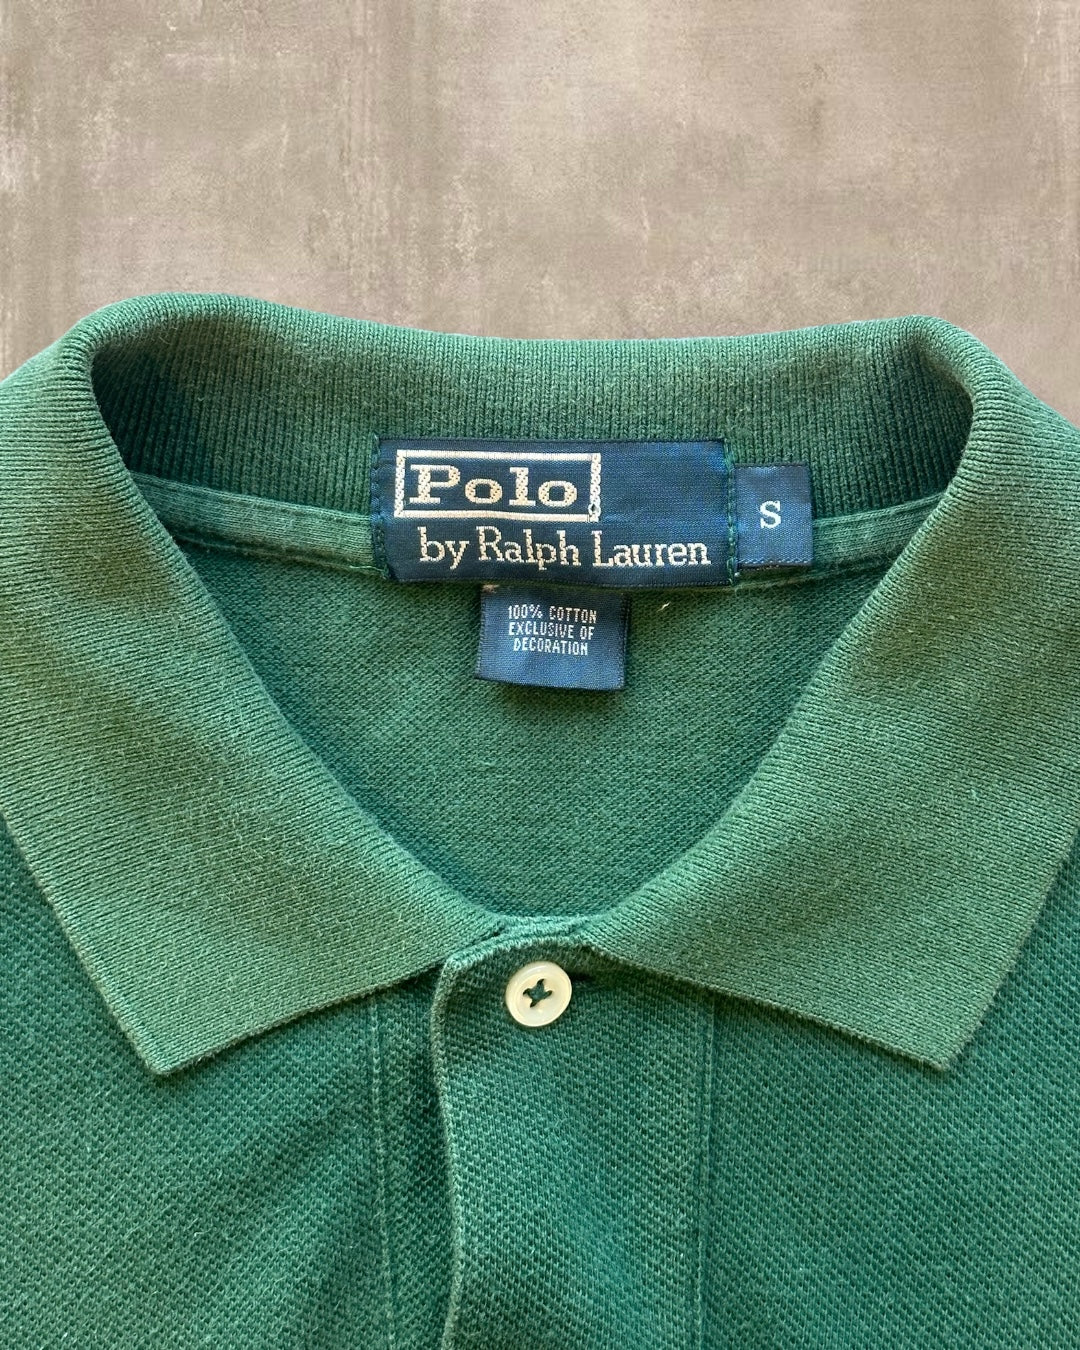 90s Polo Shirt - M